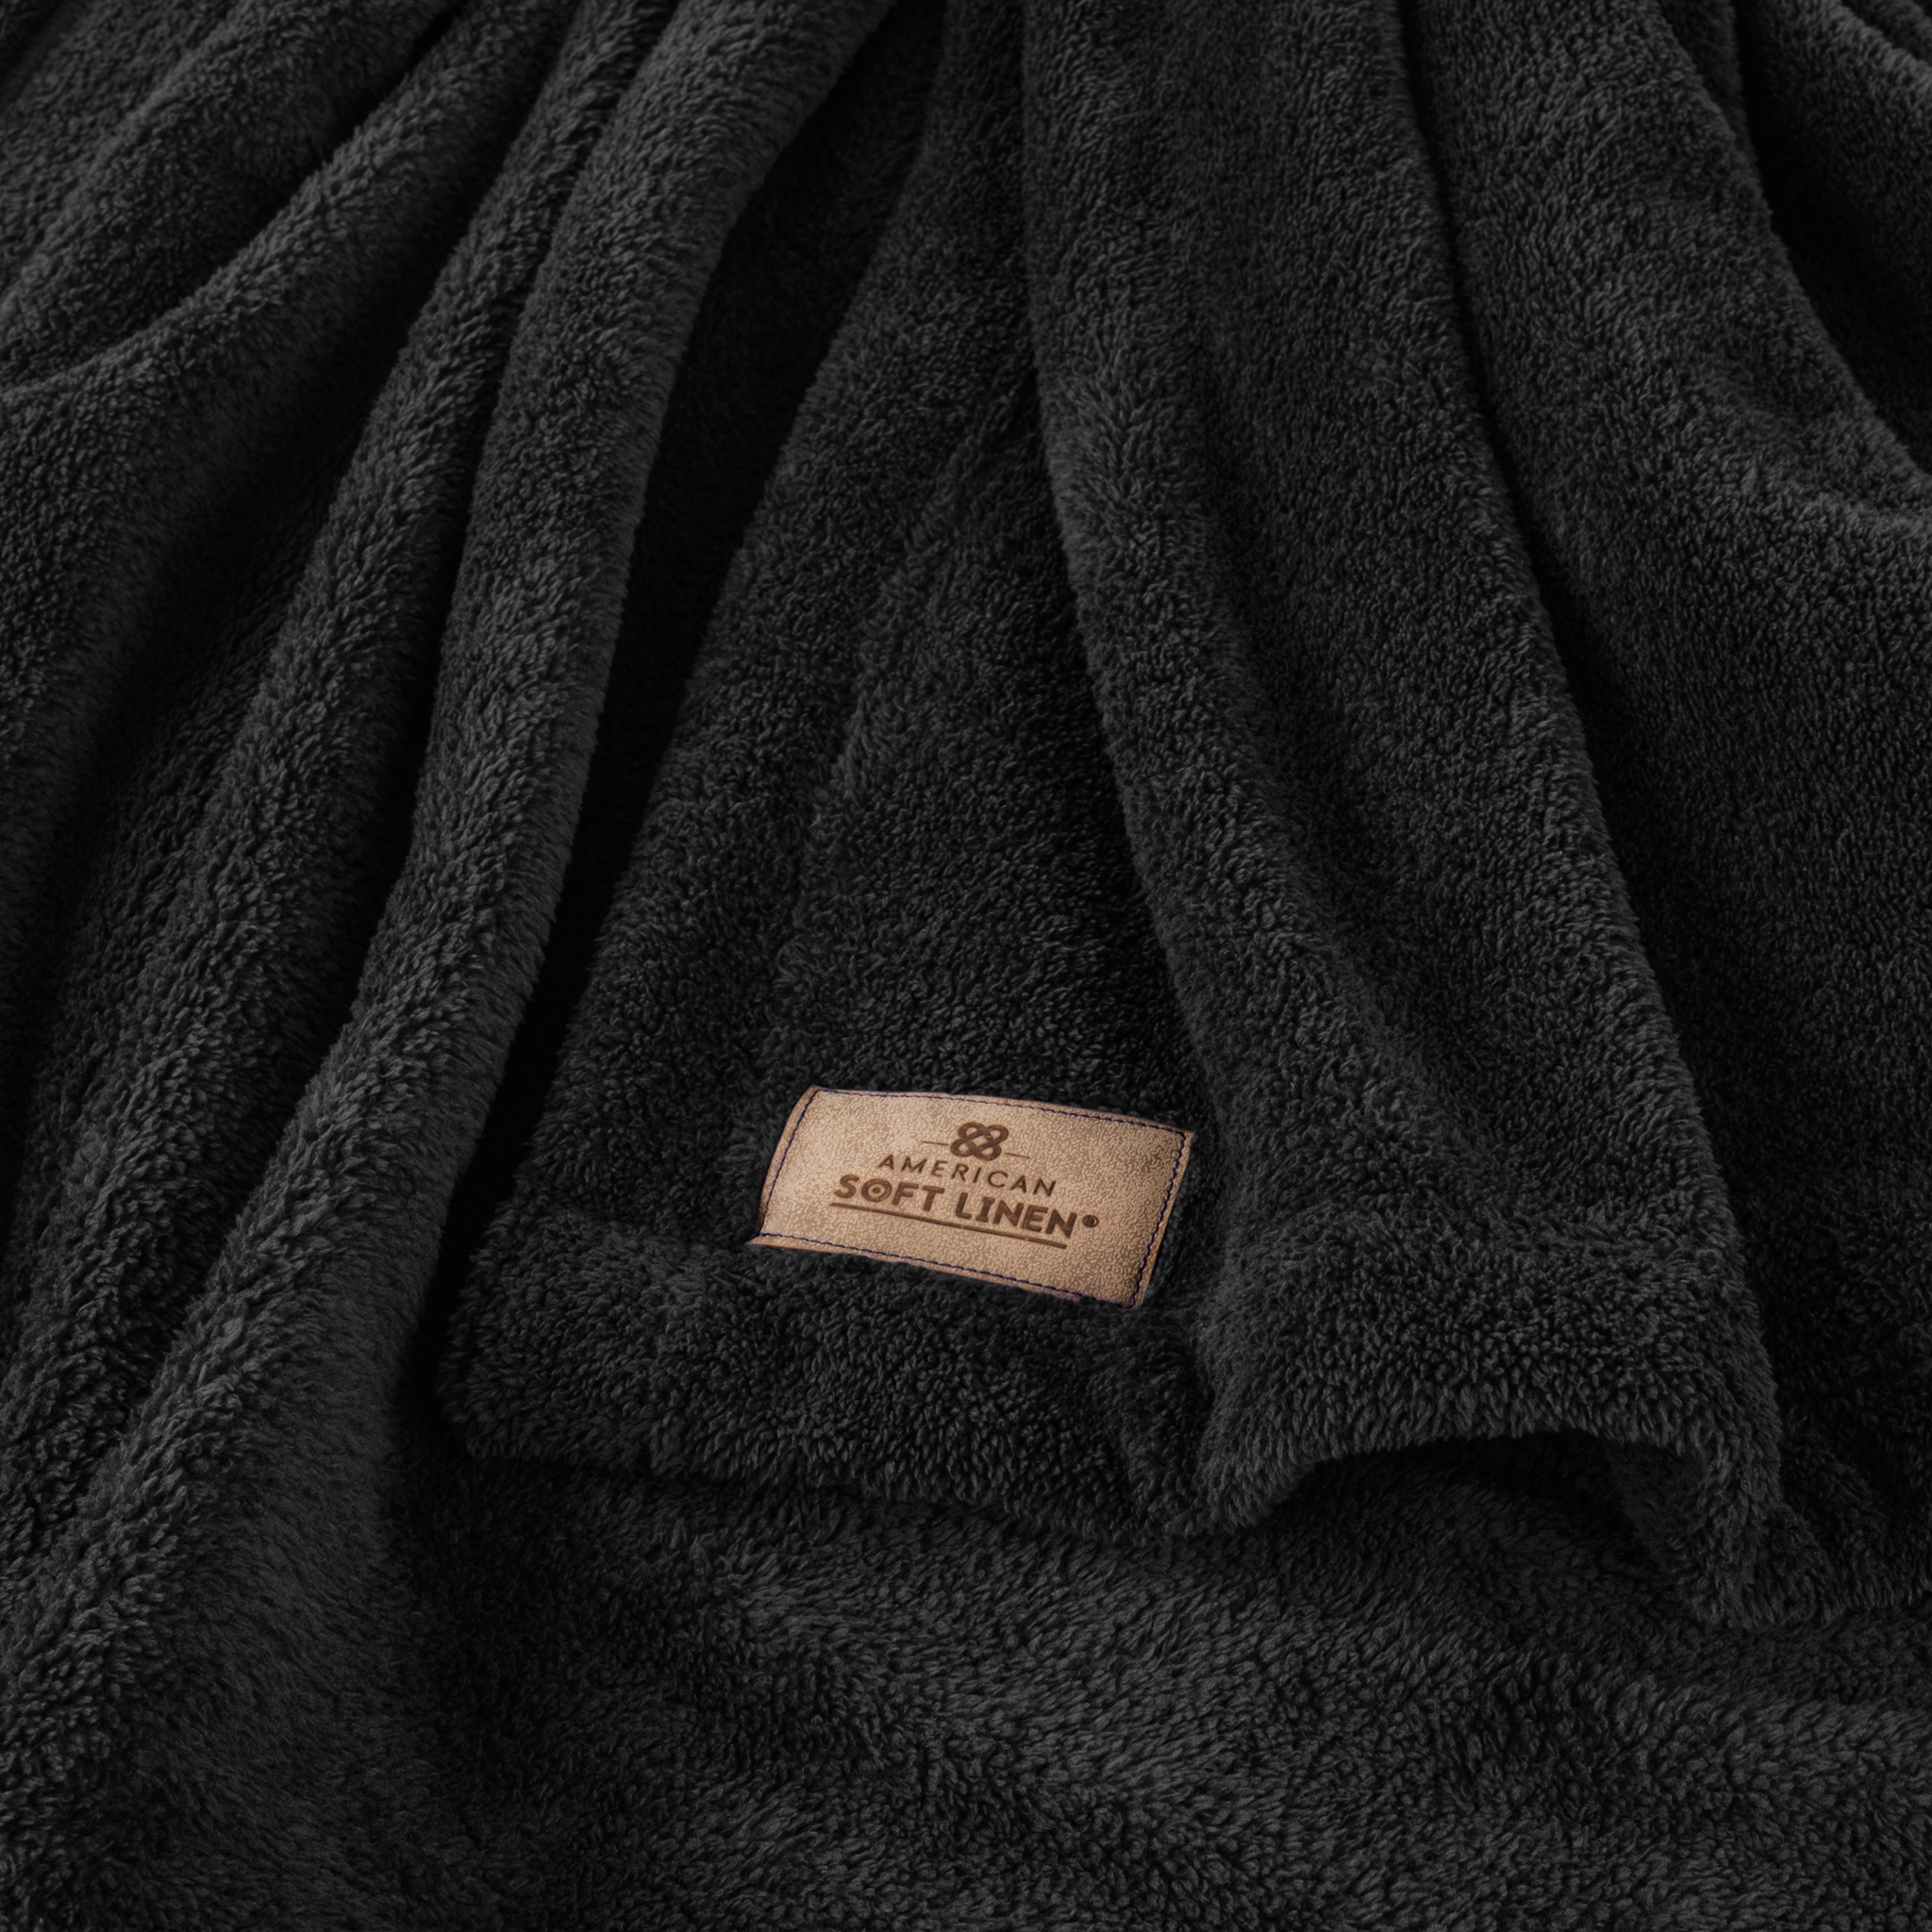 American Soft Linen - Bedding Fleece Blanket - Twin Size 60x80 inches - Black - 4